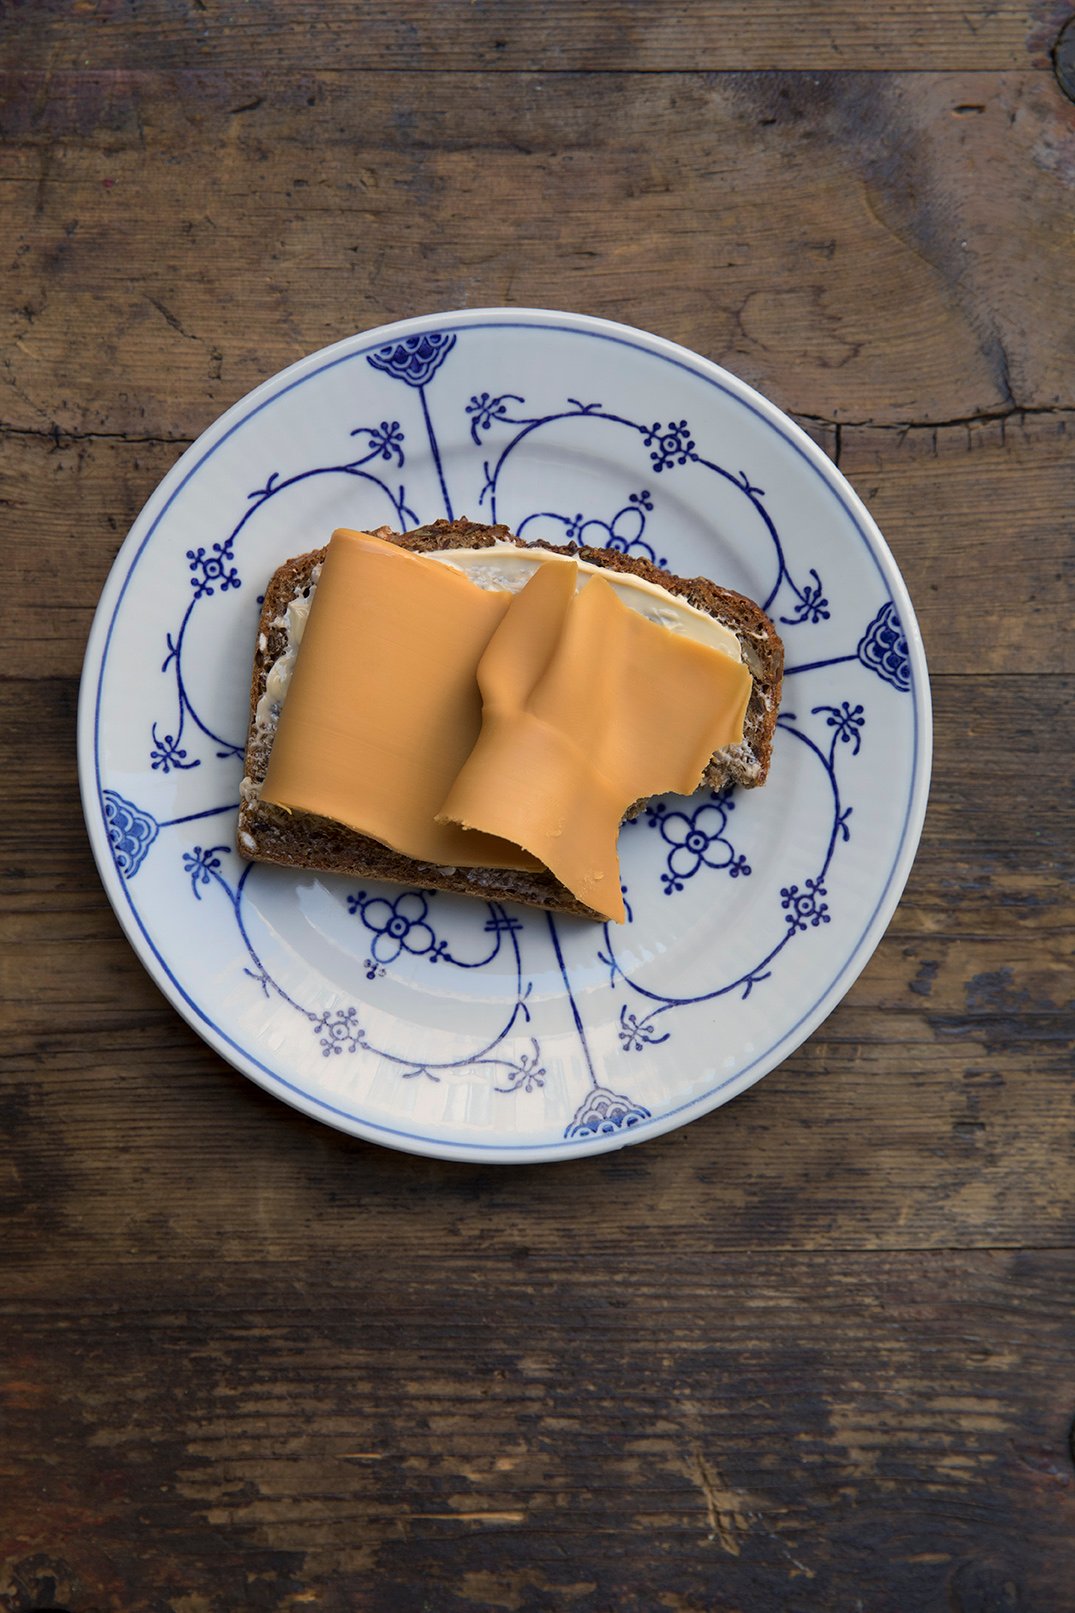 Slice of brunost on bread